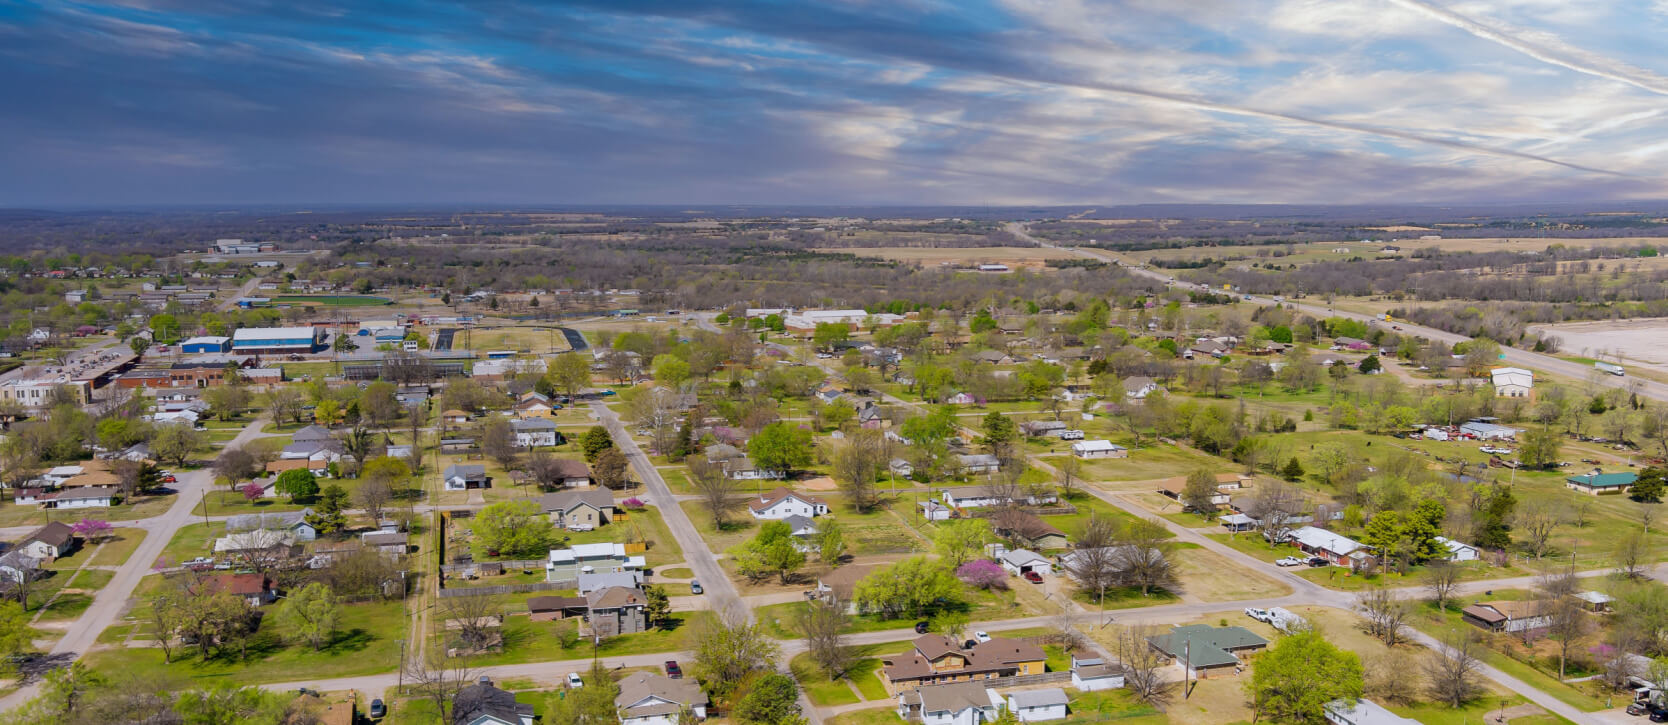 Aerial view of suburban neighborhood in Oklahoma City